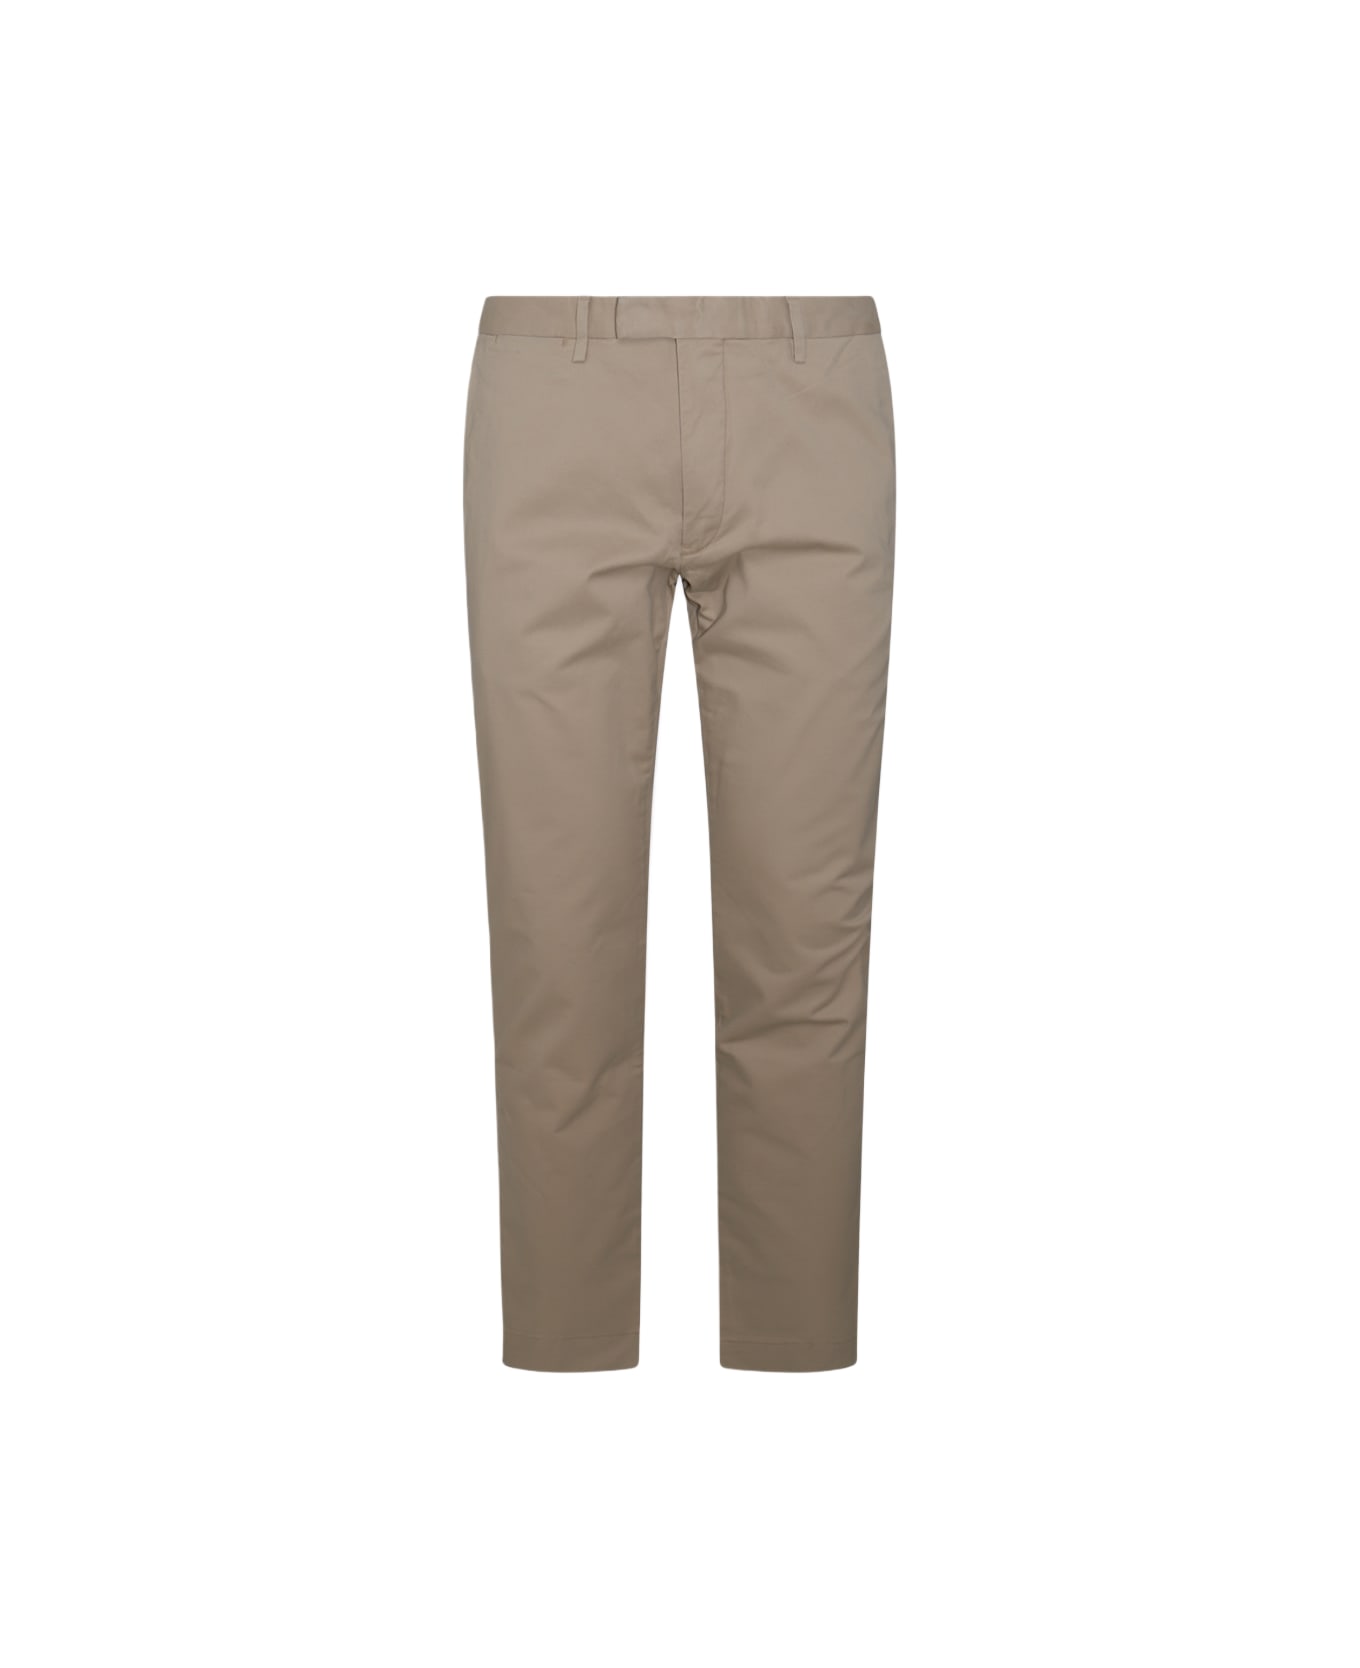 Polo Ralph Lauren Beige Cotton Pants - CLASSIC KHAKI ボトムス